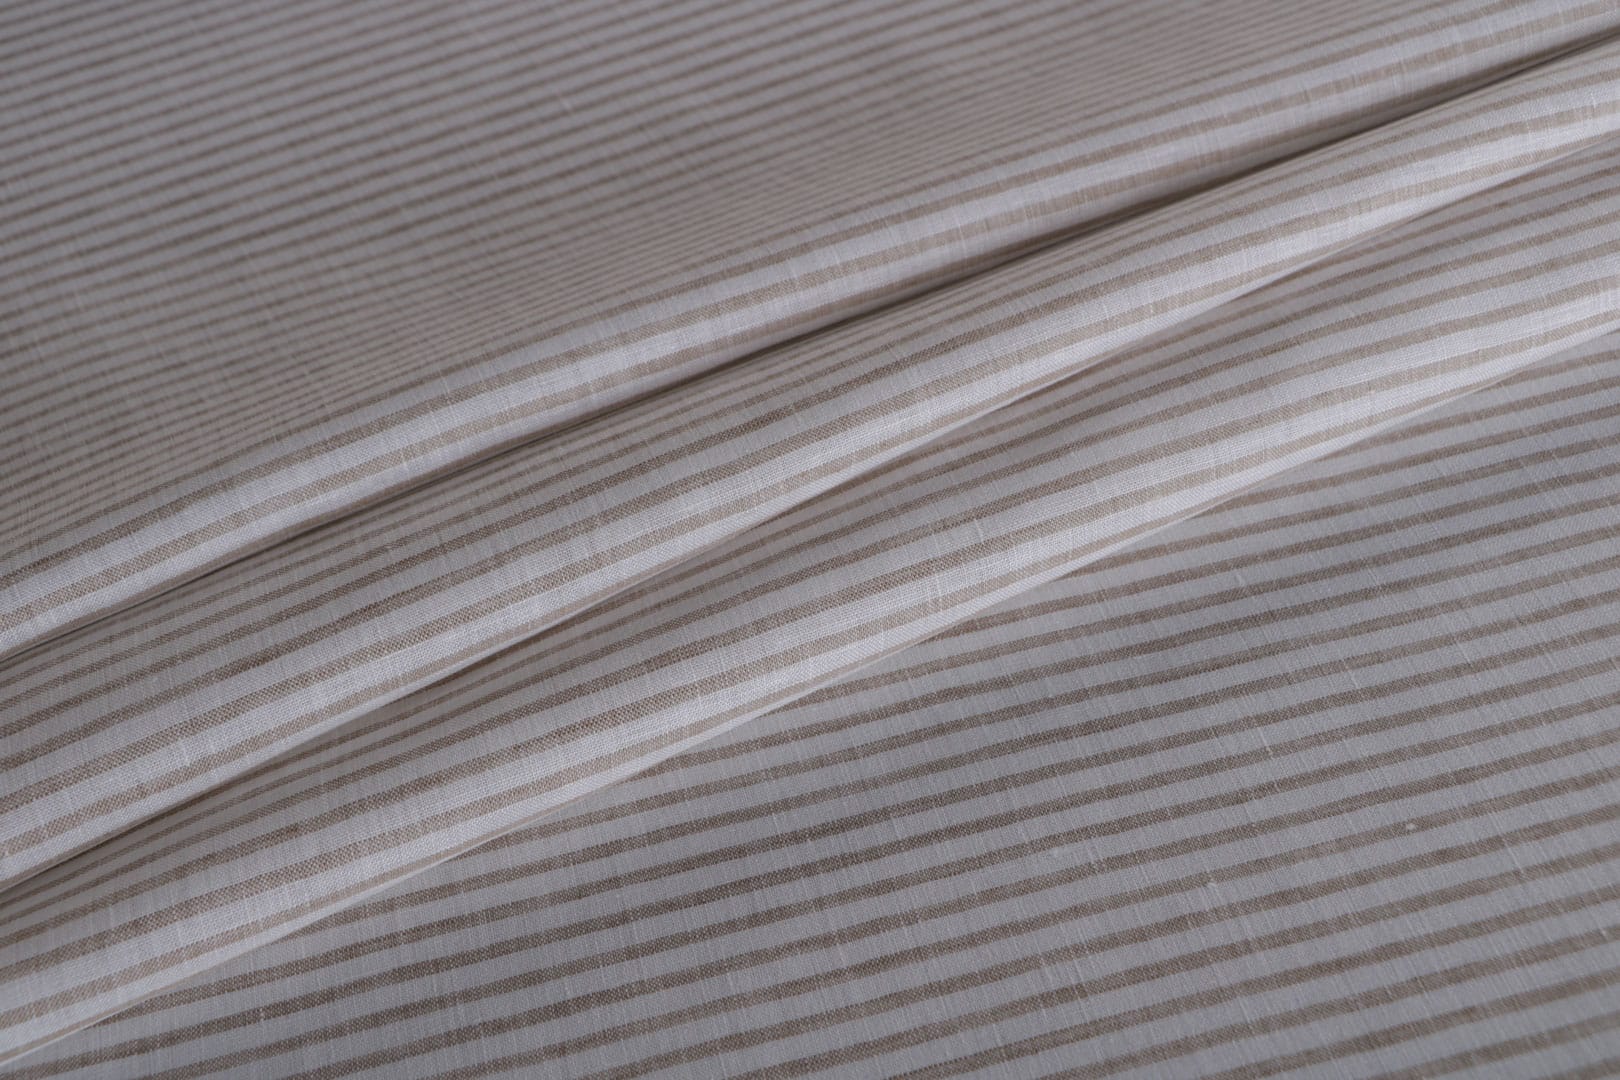 Beige, White Linen Chambray fabric for dressmaking